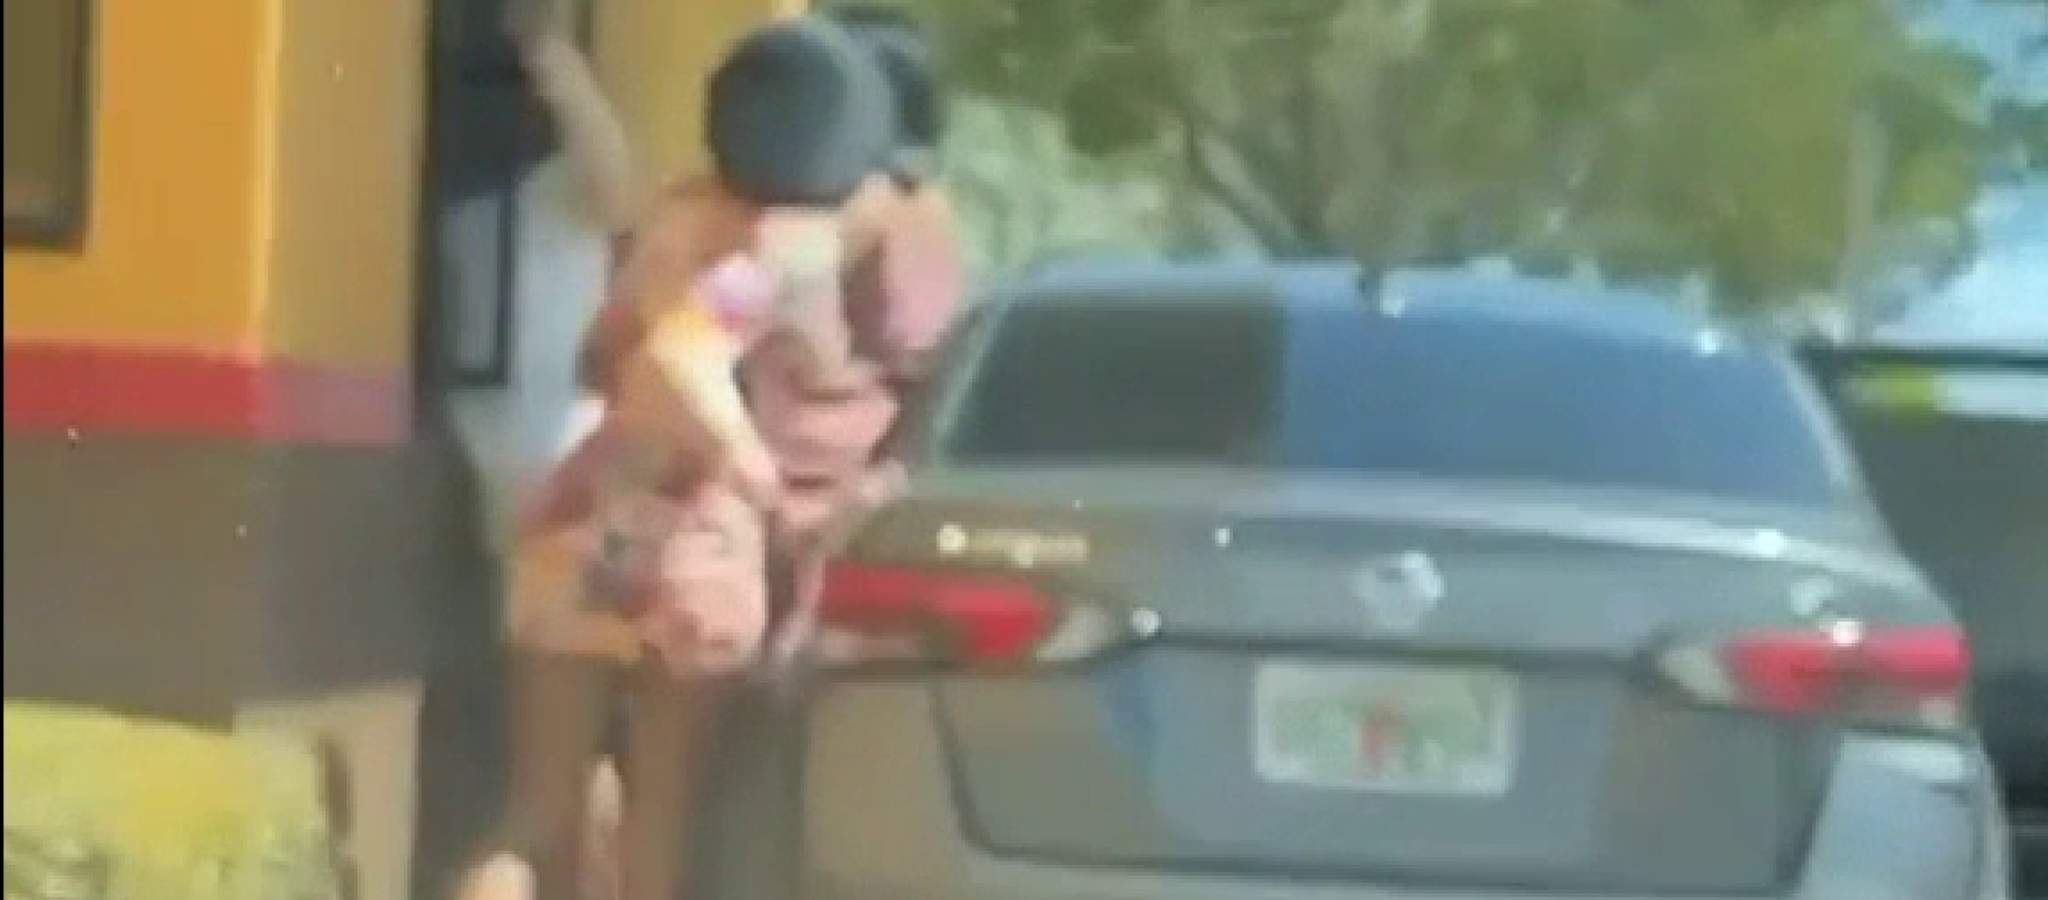 Video shows women attacking worker at Florida Popeye’s drive-thru window